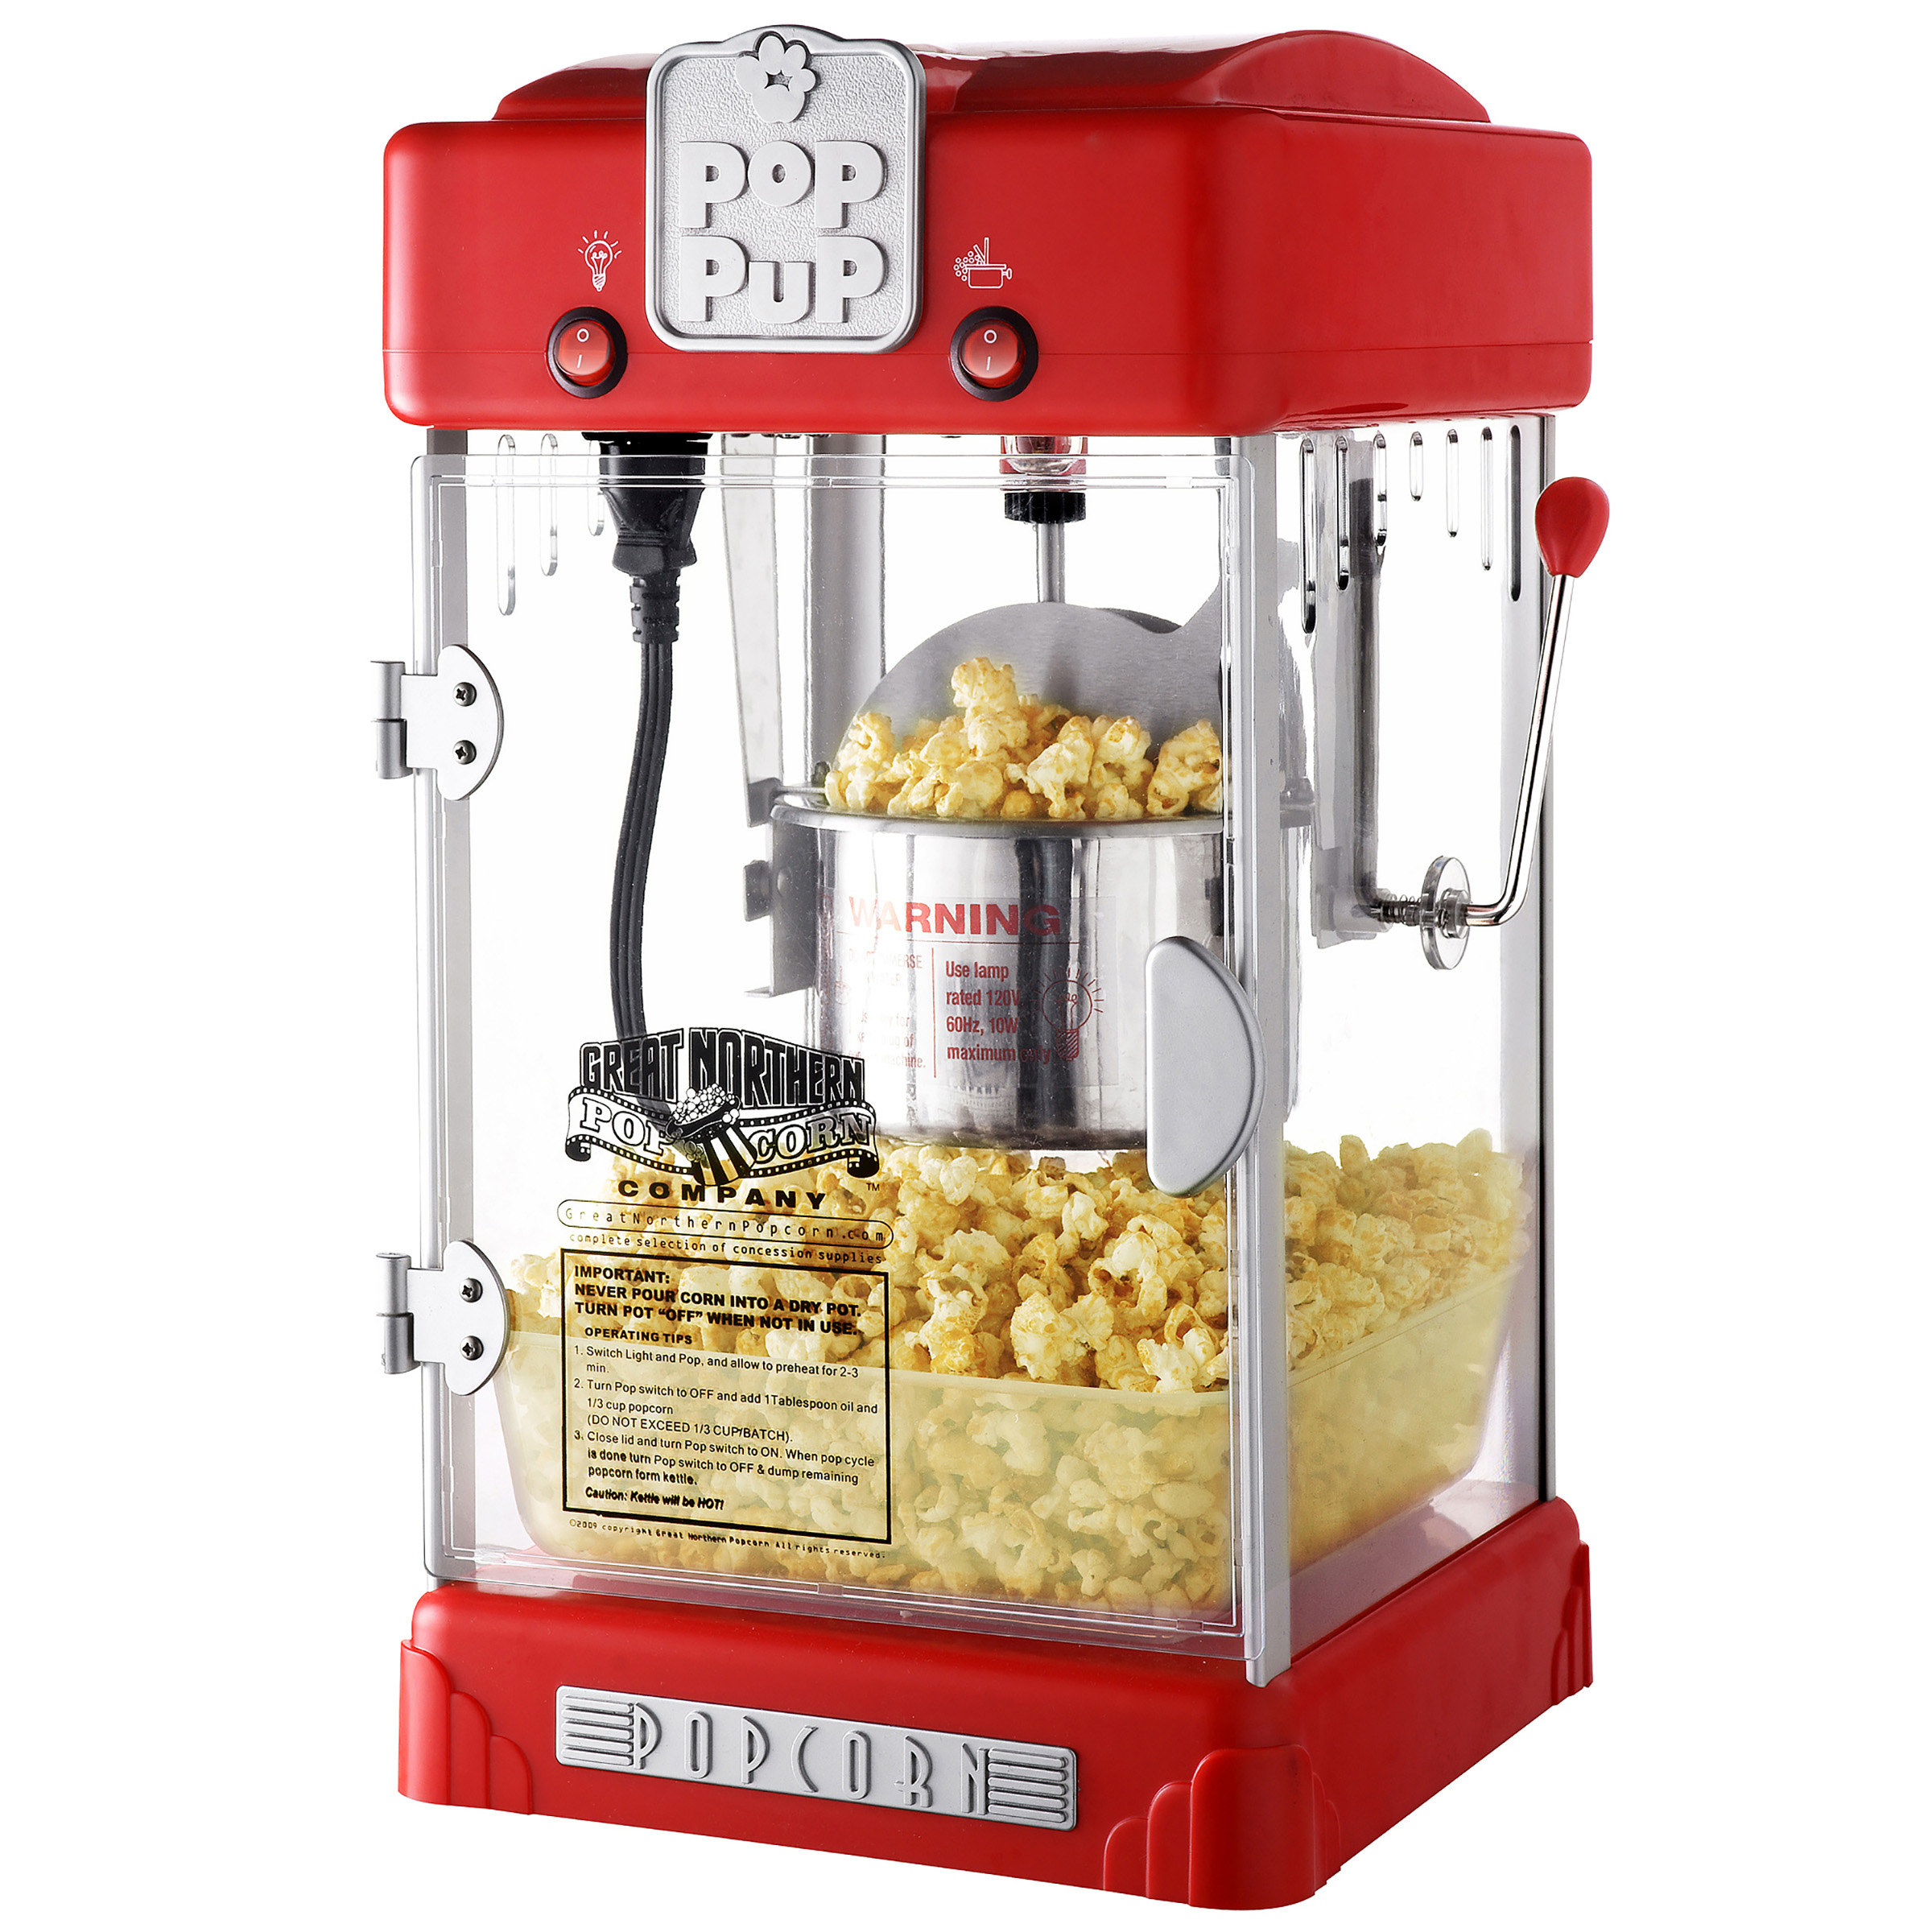 the red popcorn machine